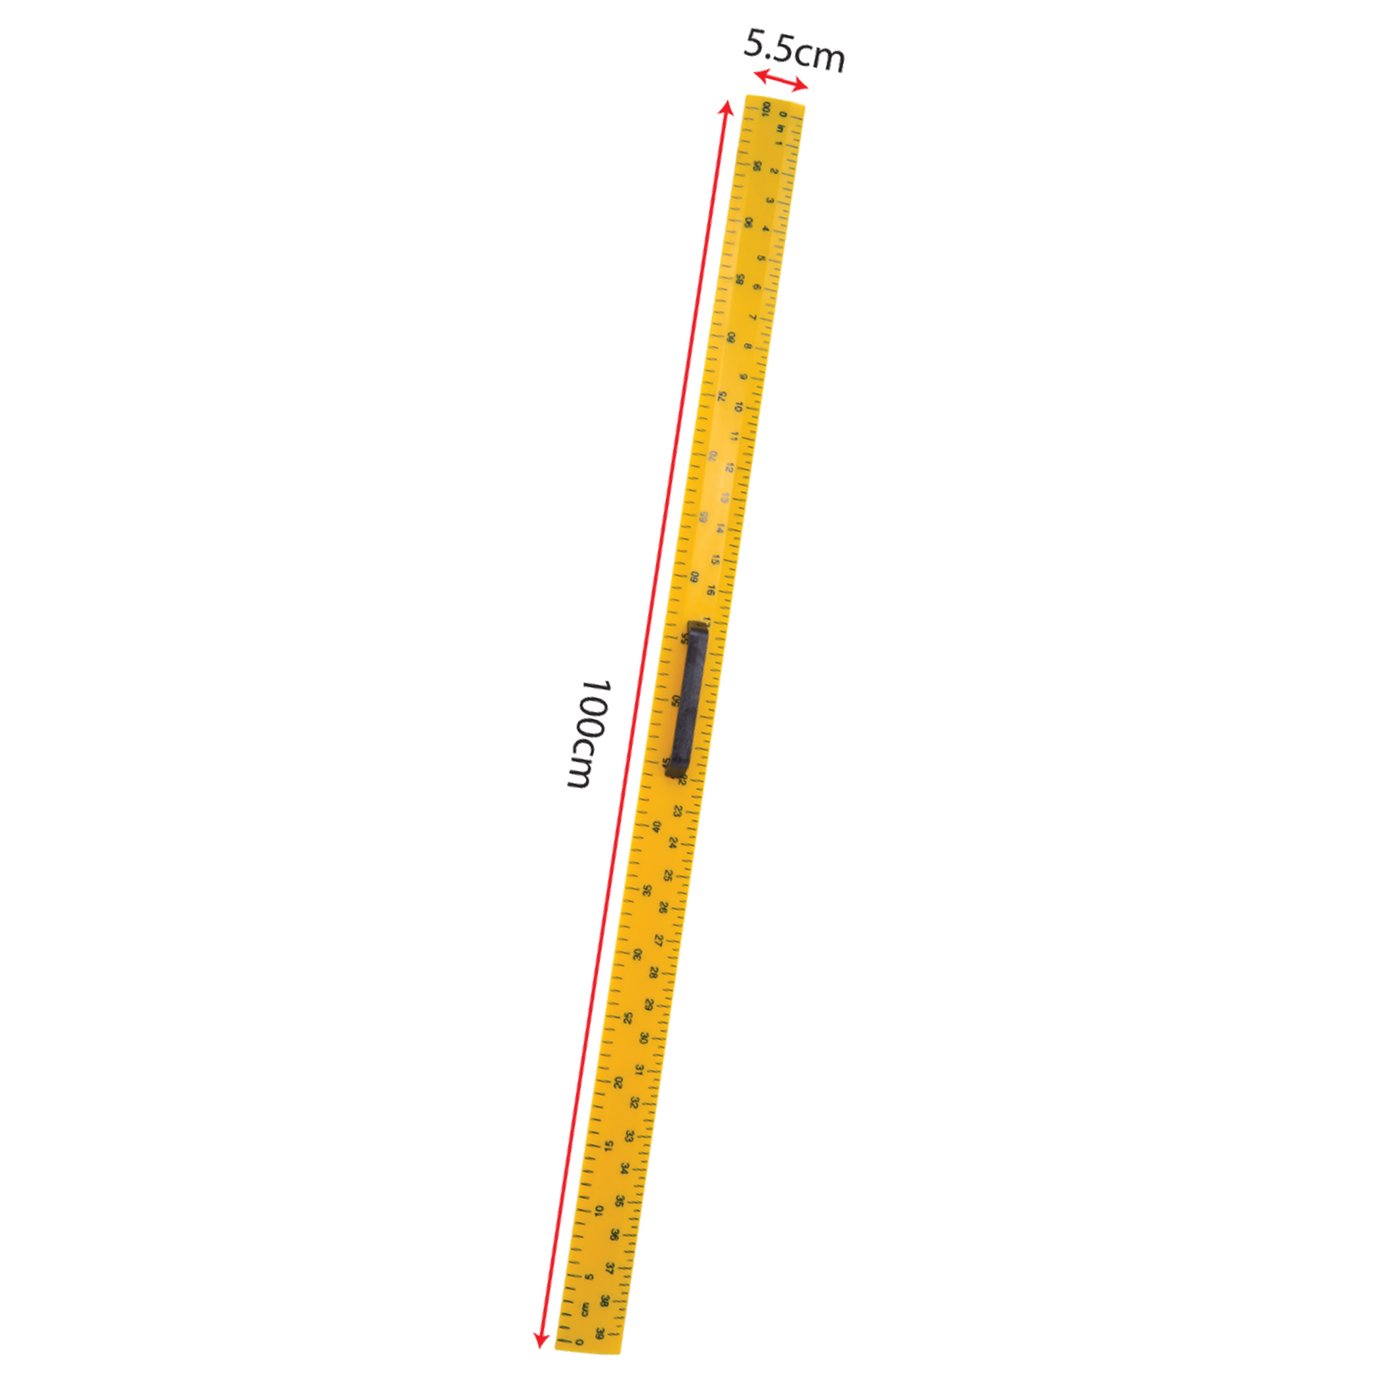 street view ruler tool